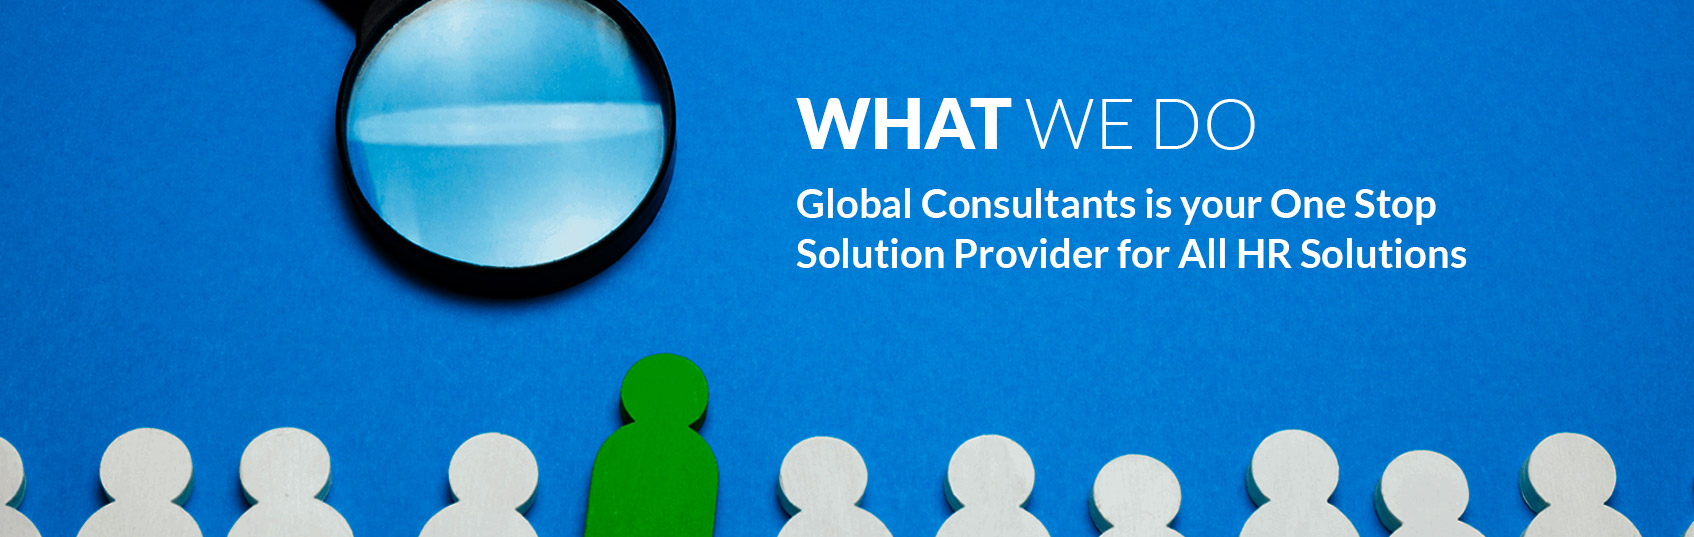 Global Consultants banner 1